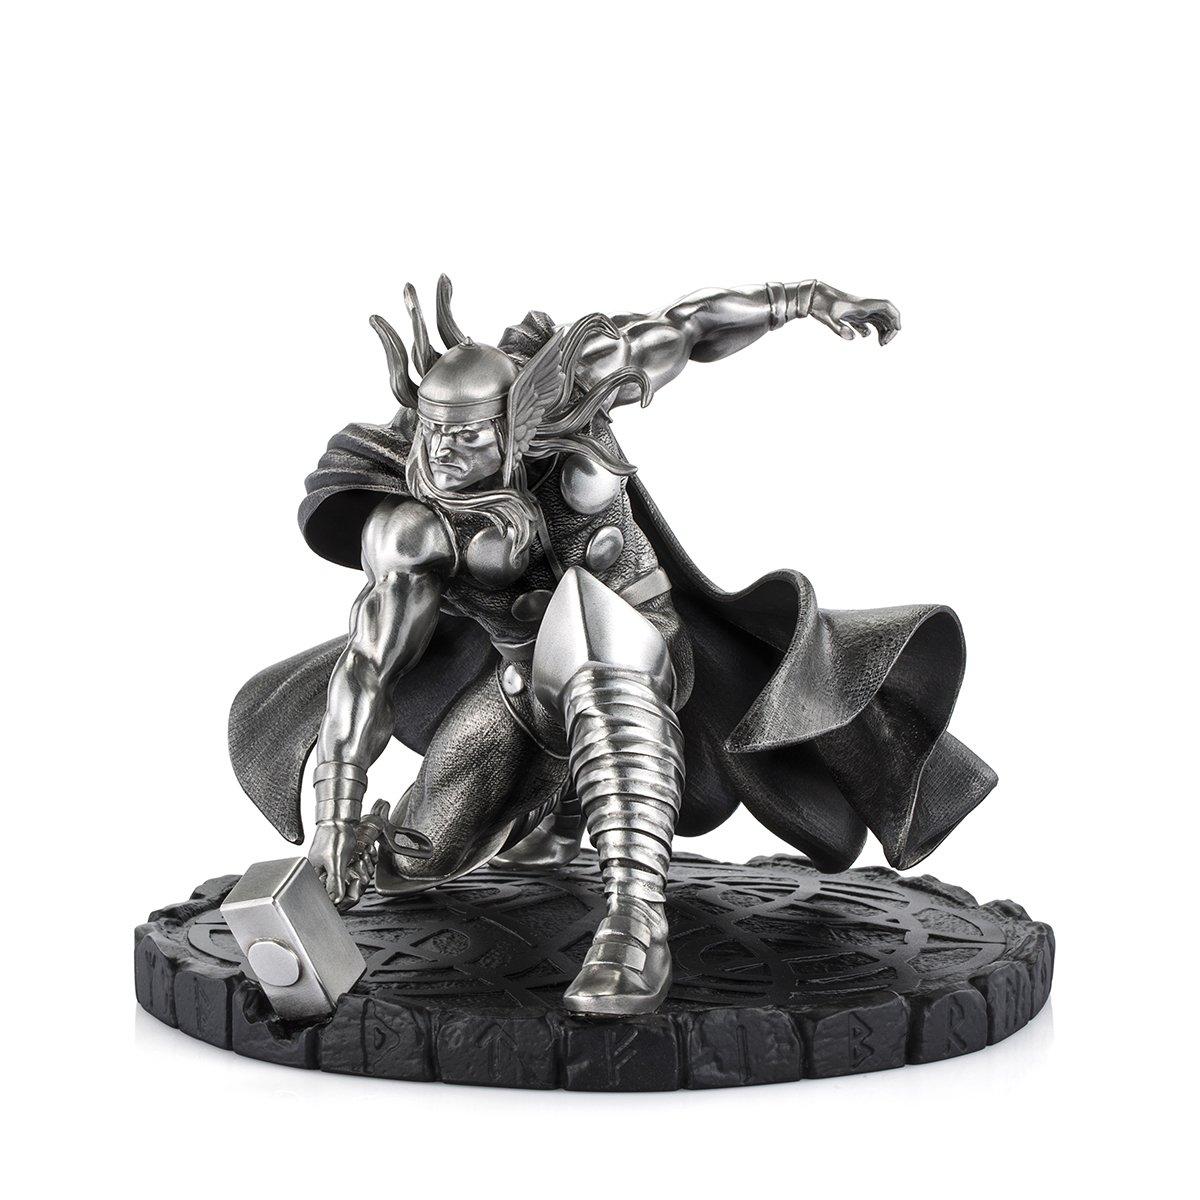 Limited Edition Thor God of Thunder Figurine